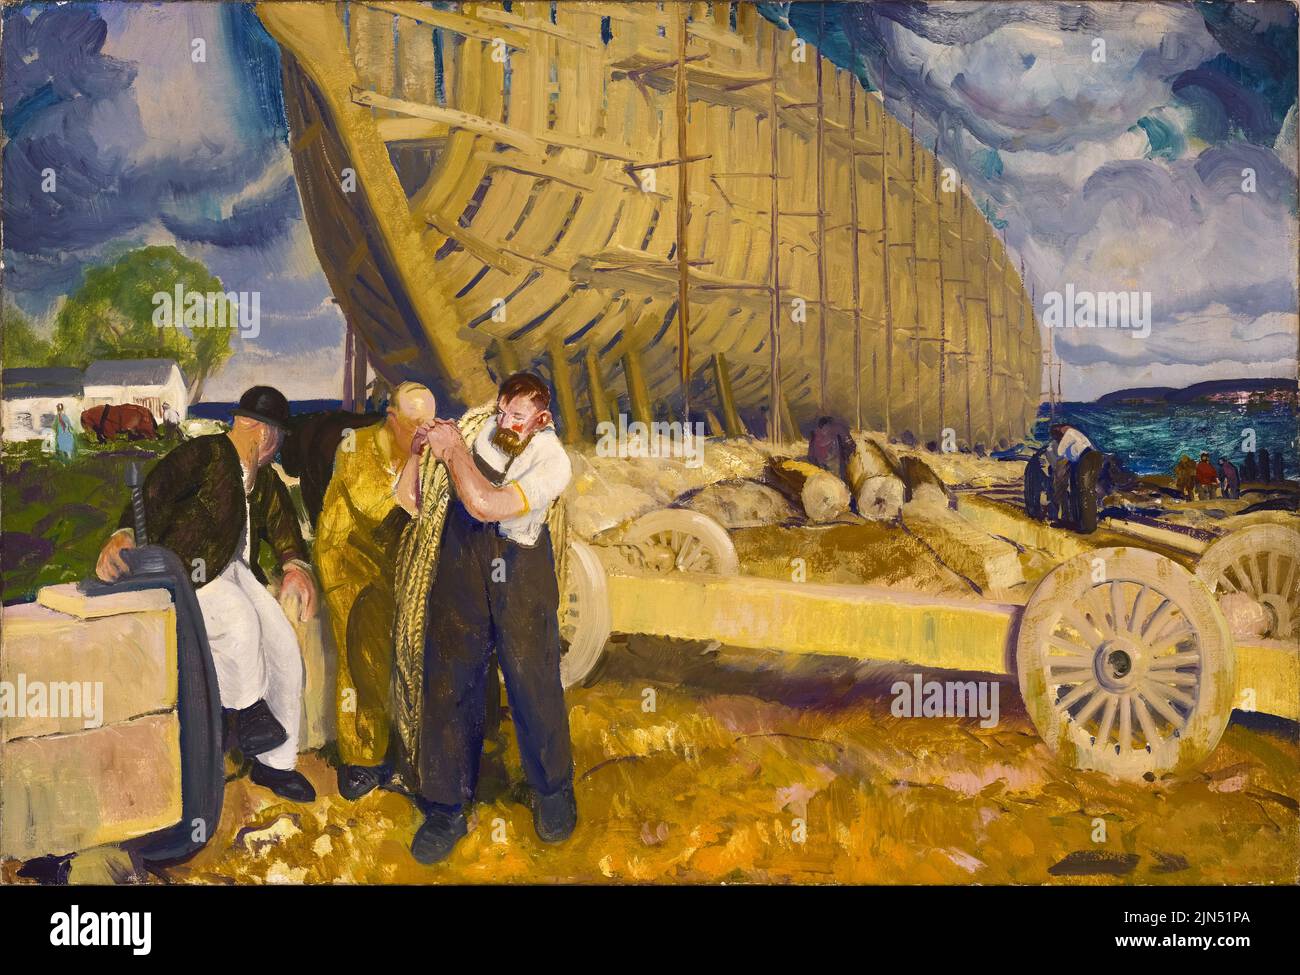 George Bellows, Constructores de Barcos, pintura al óleo sobre lienzo, 1916 Foto de stock